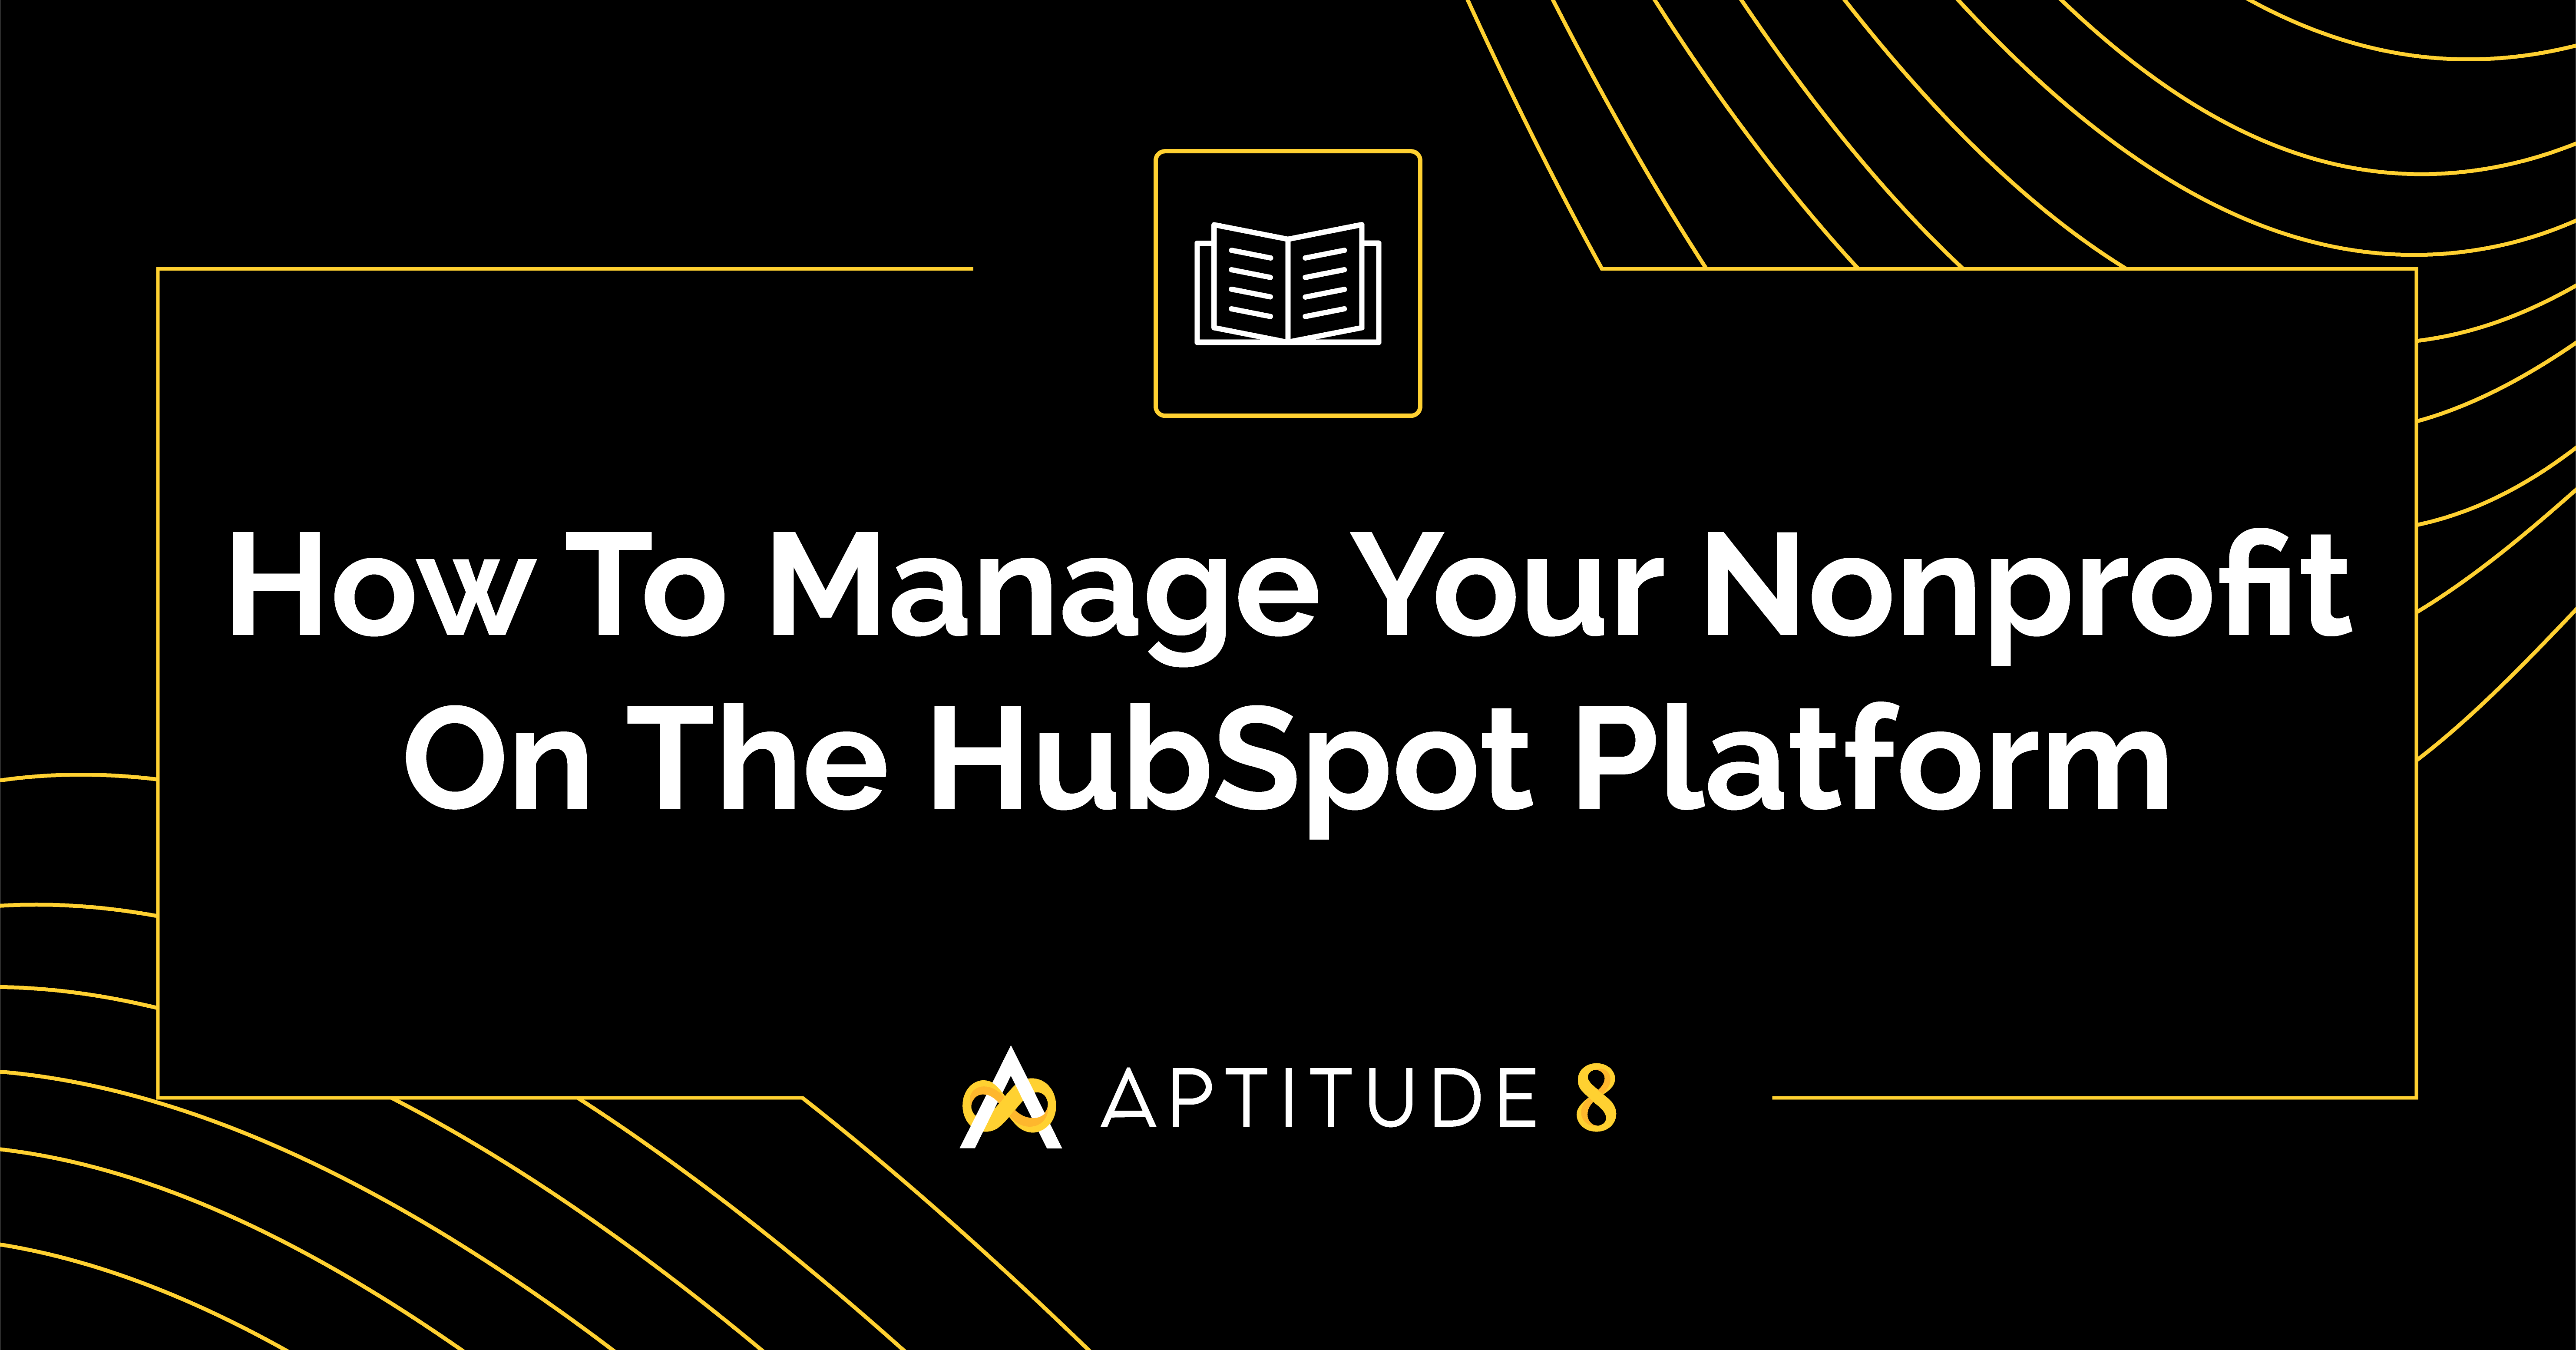 Webinar: Managing Your Nonprofit On The HubSpot Platform